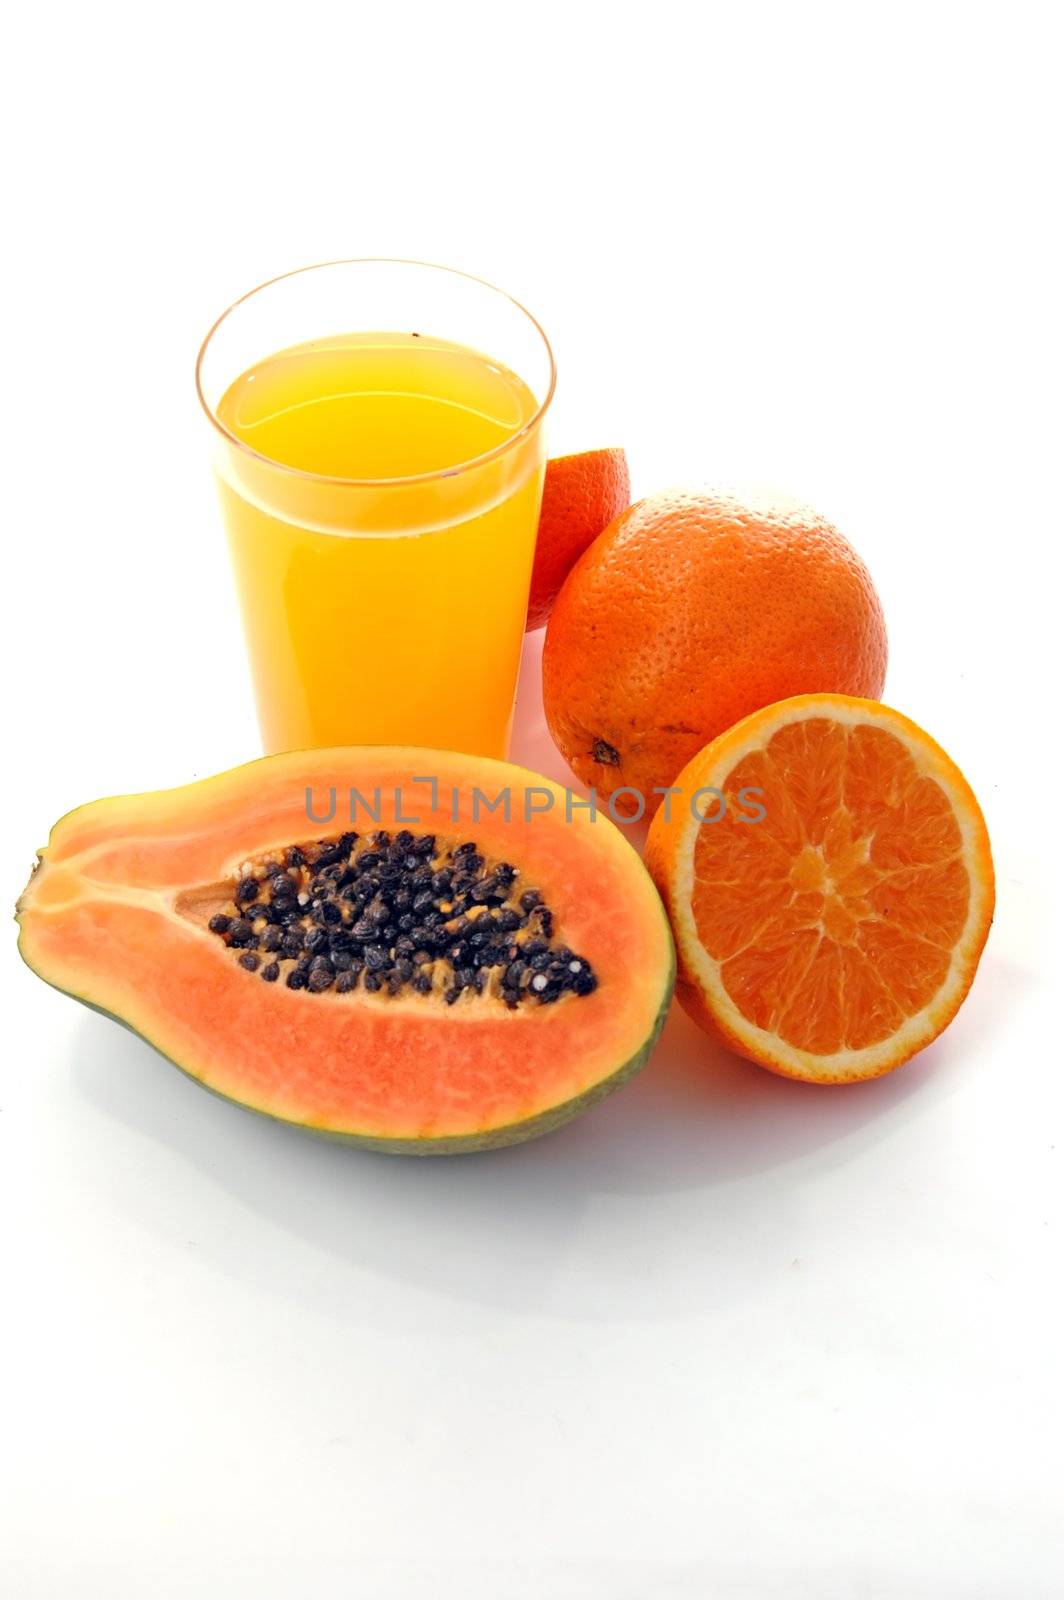 a glass of orange juice with cut oranges